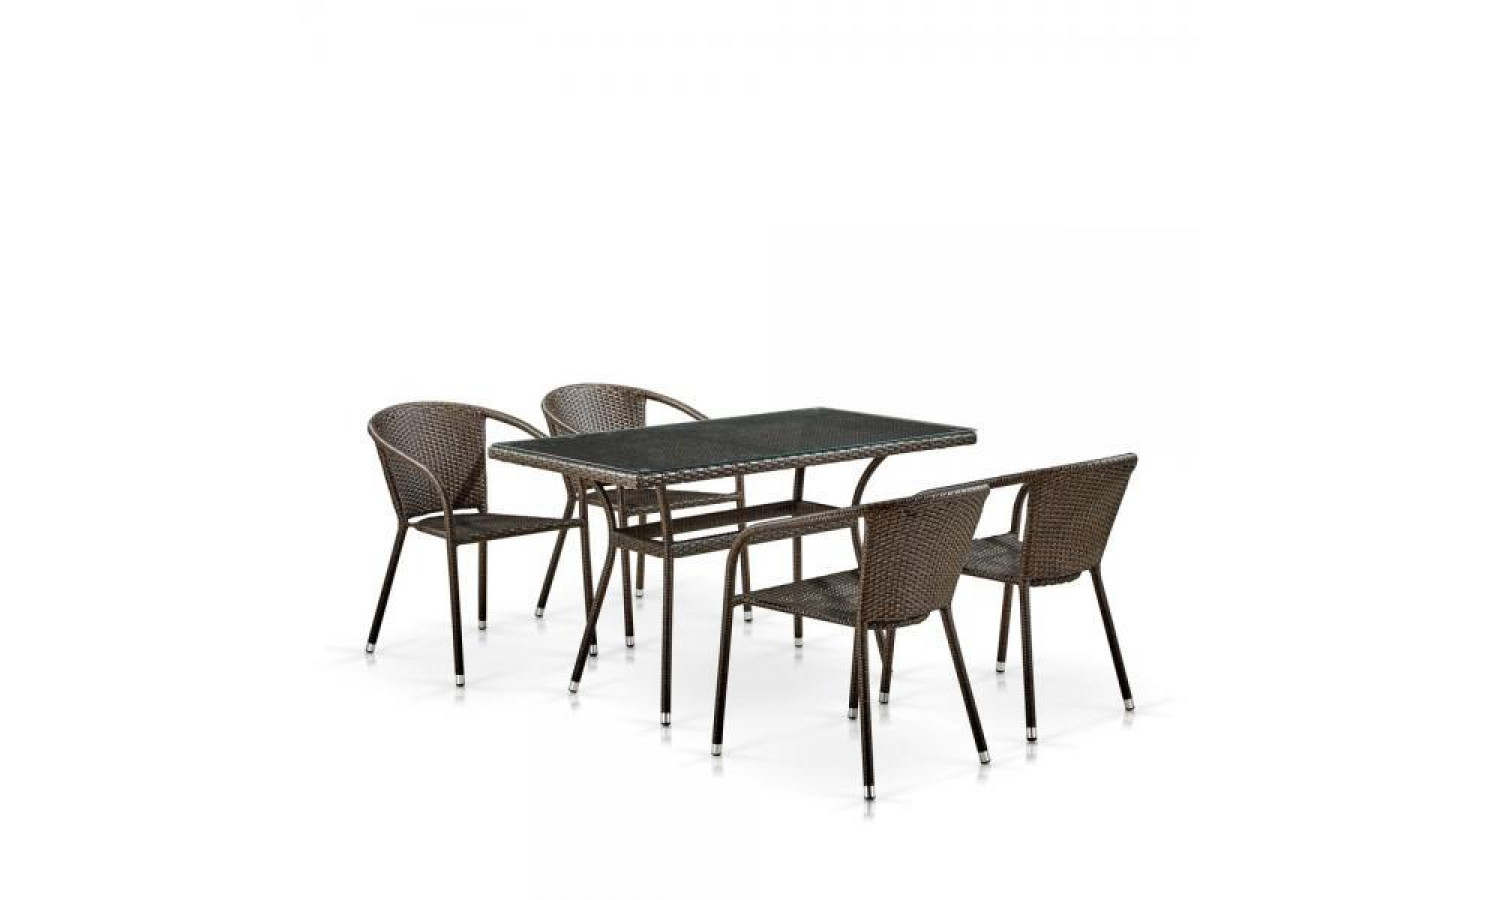 Комплект плетеной мебели T286A/Y137C-W53 Brown (4+1)